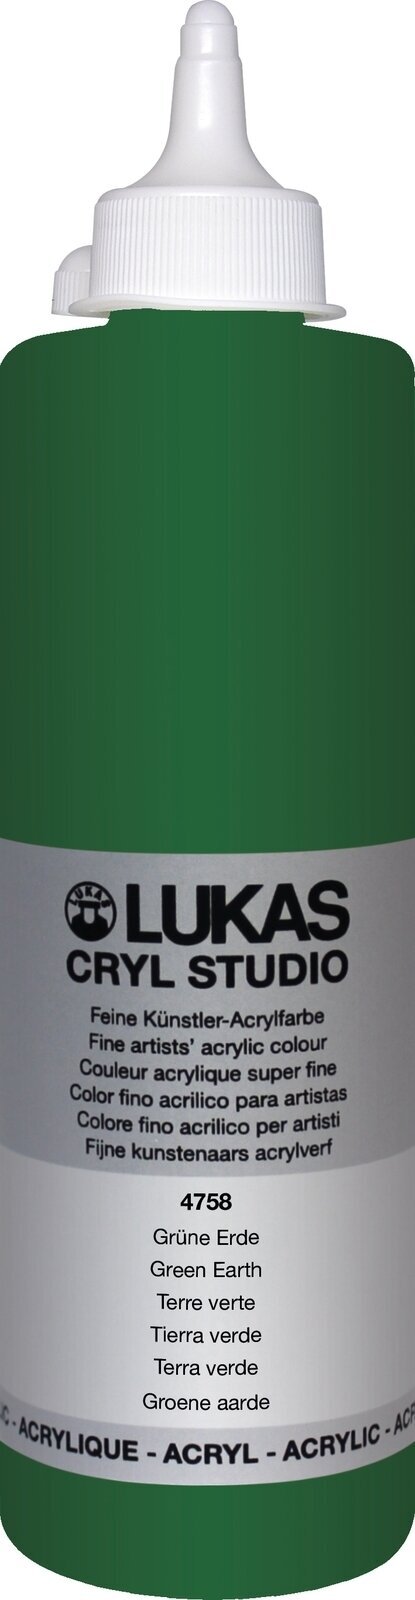 Acrylic Paint Lukas Cryl Studio Acrylic Paint Plastic Bottle Acrylic Paint Green Earth 500 ml 1 pc